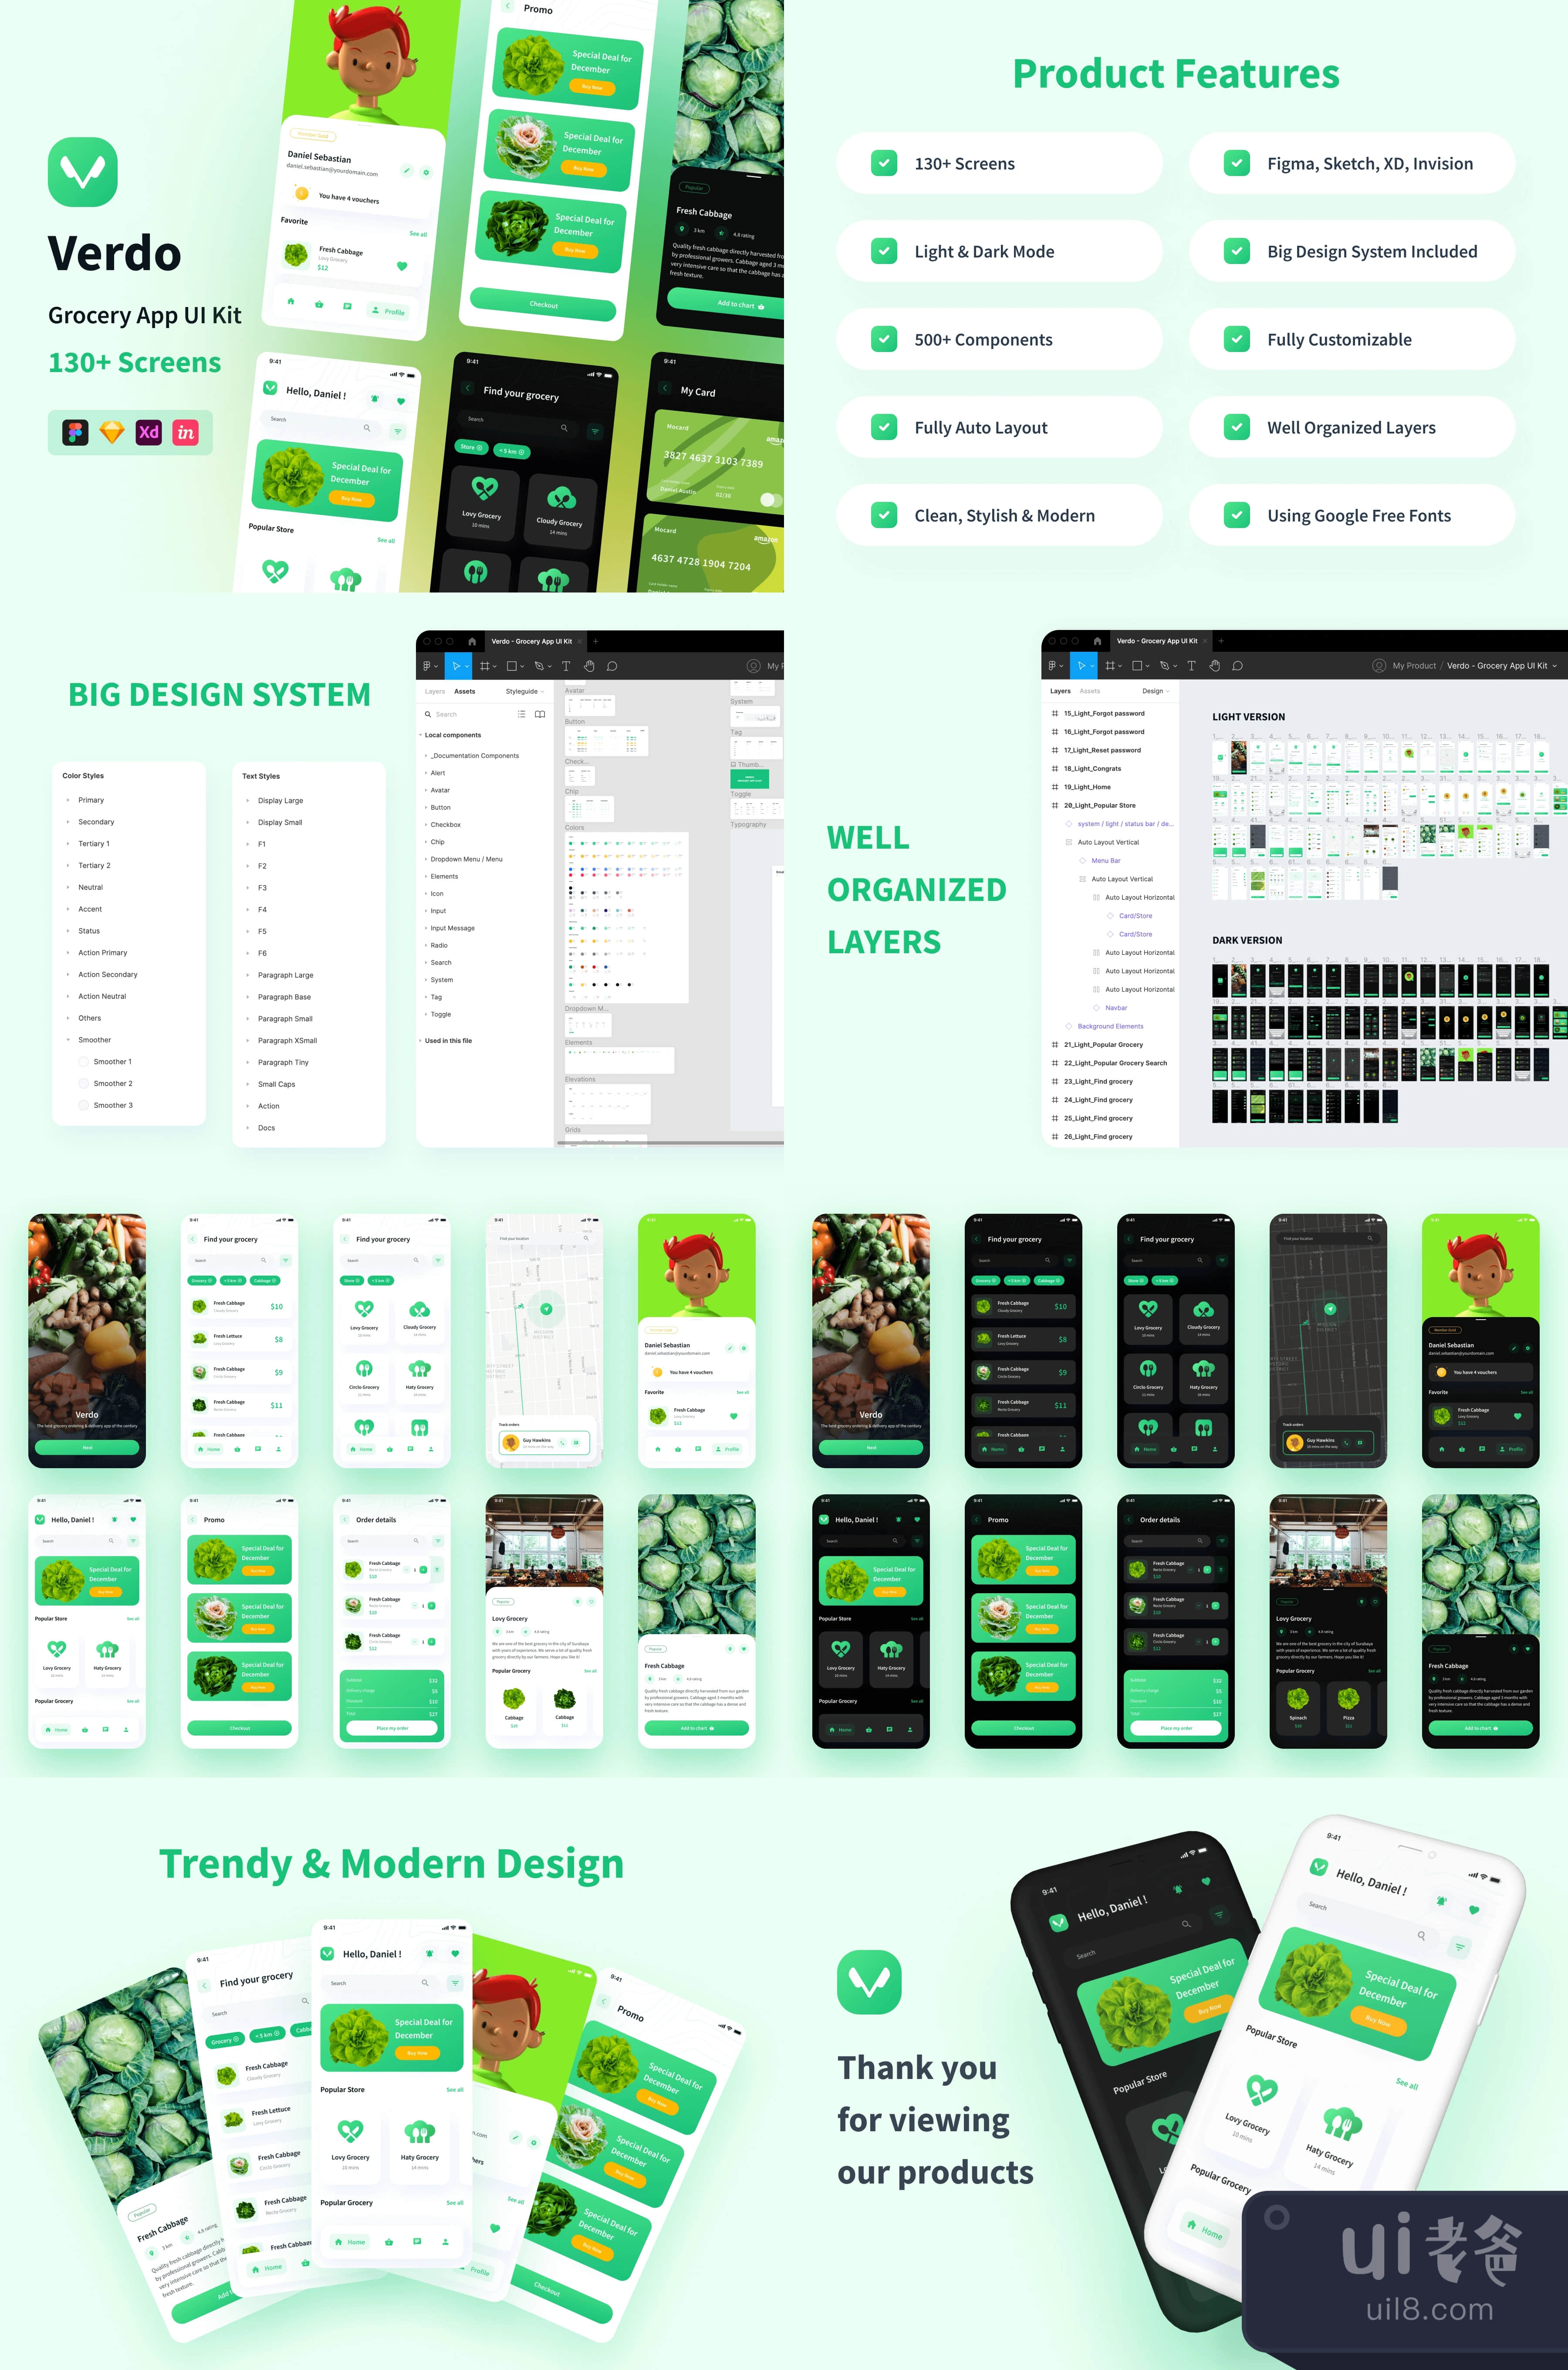 Verdo - 杂货店应用UI包 (Verdo - Grocery App UI Kit)插图